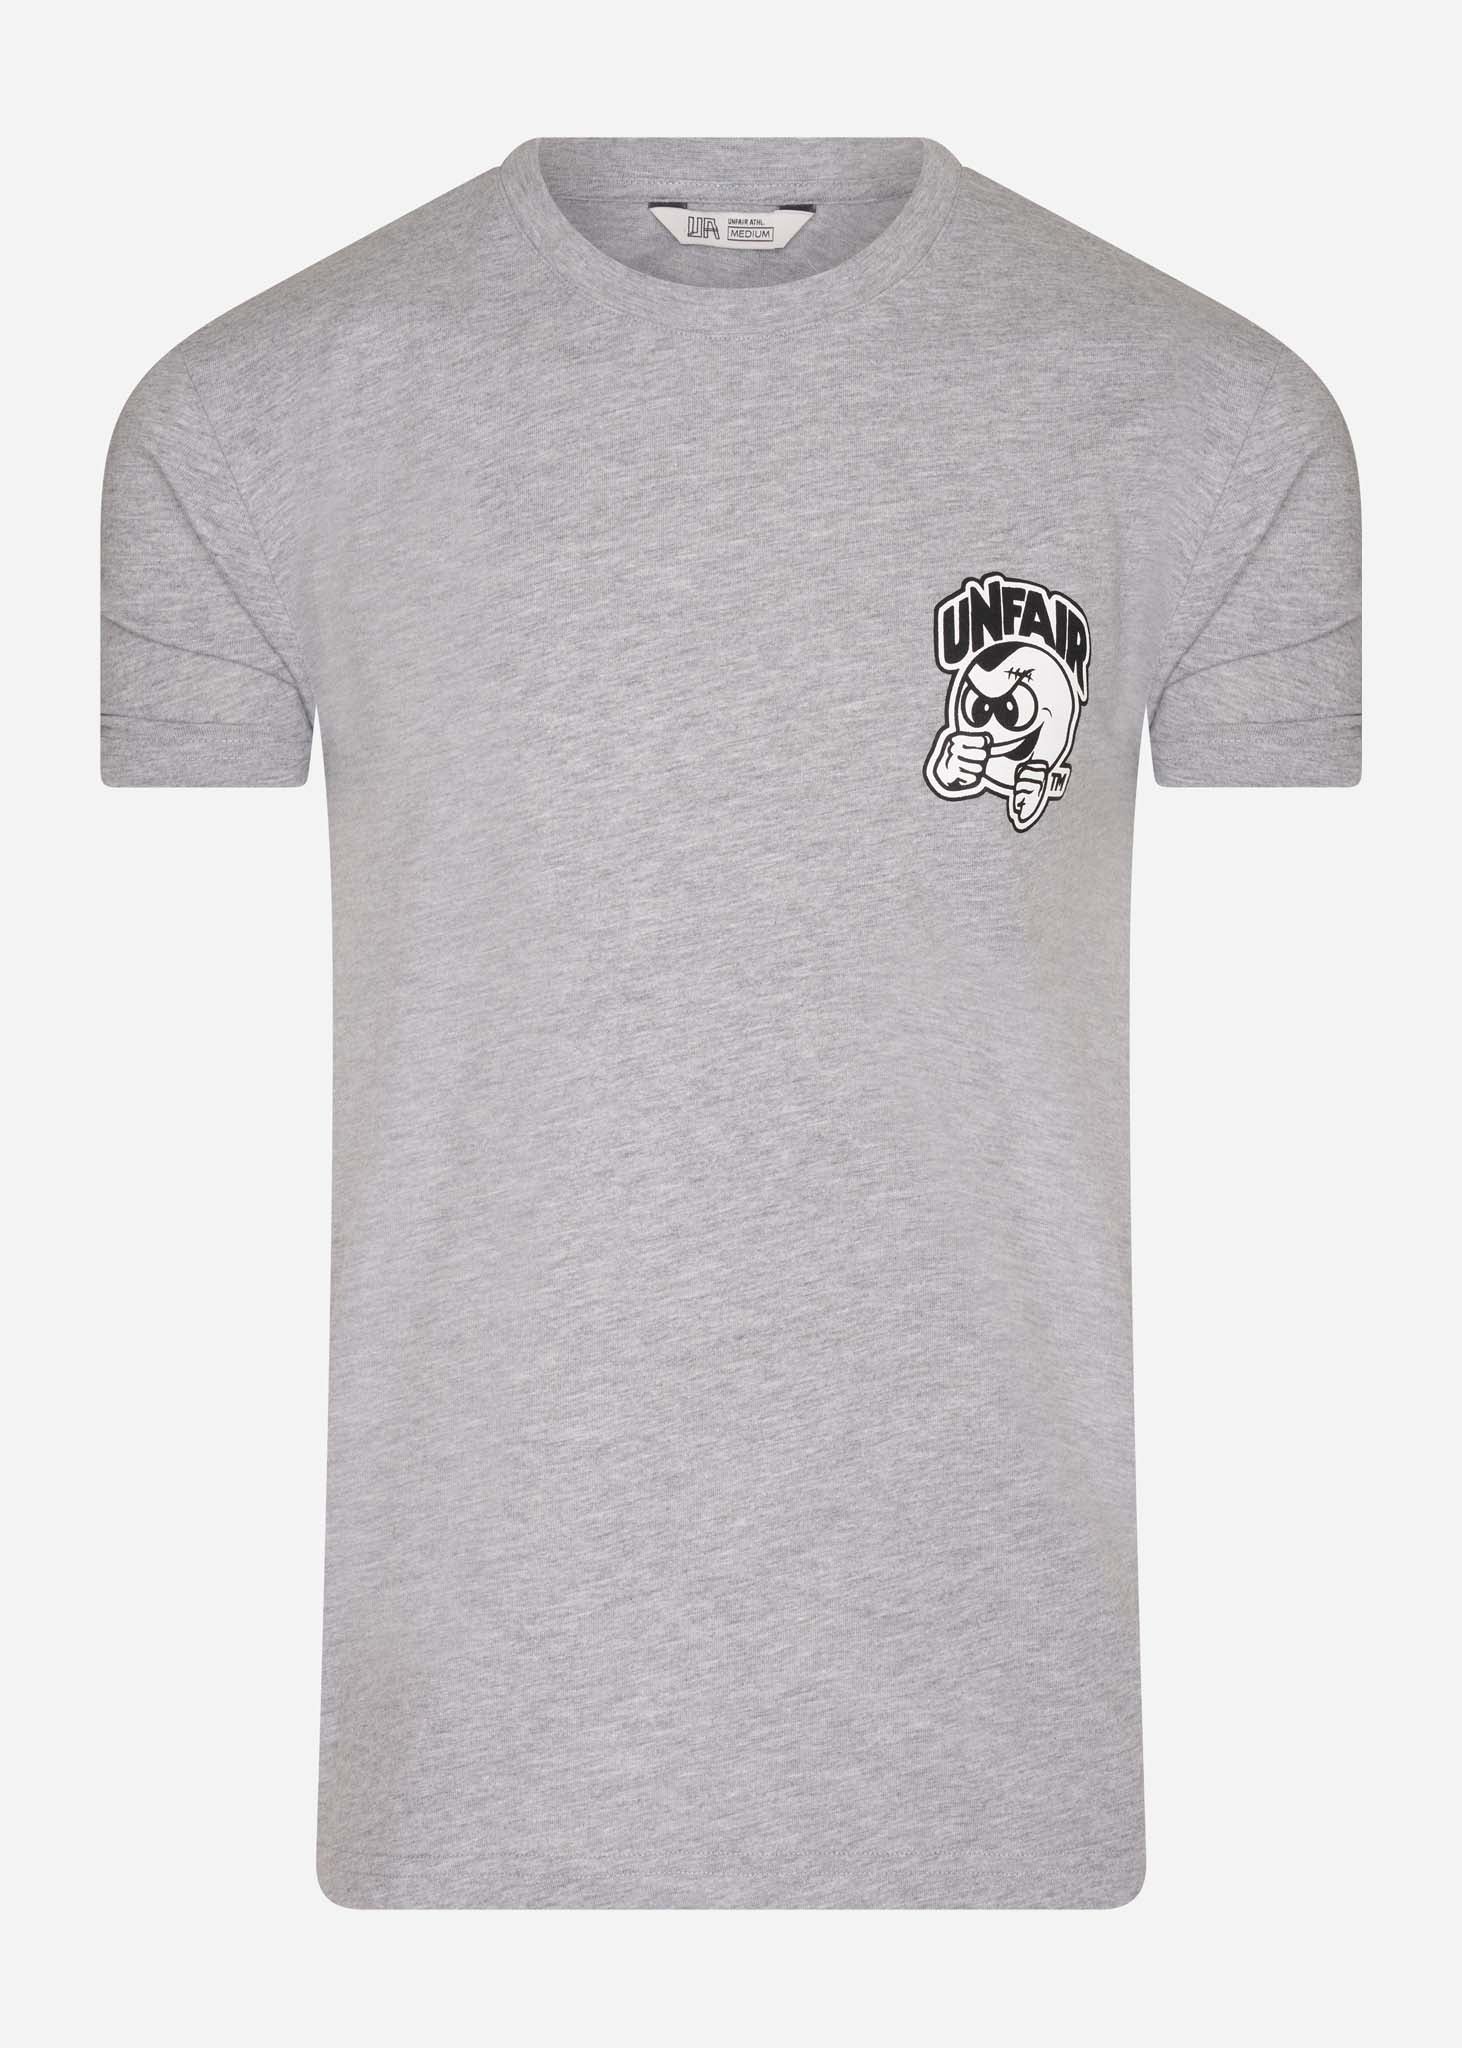 Unfair Athletics T-shirts  Punchingball t-shirt - grey melange 